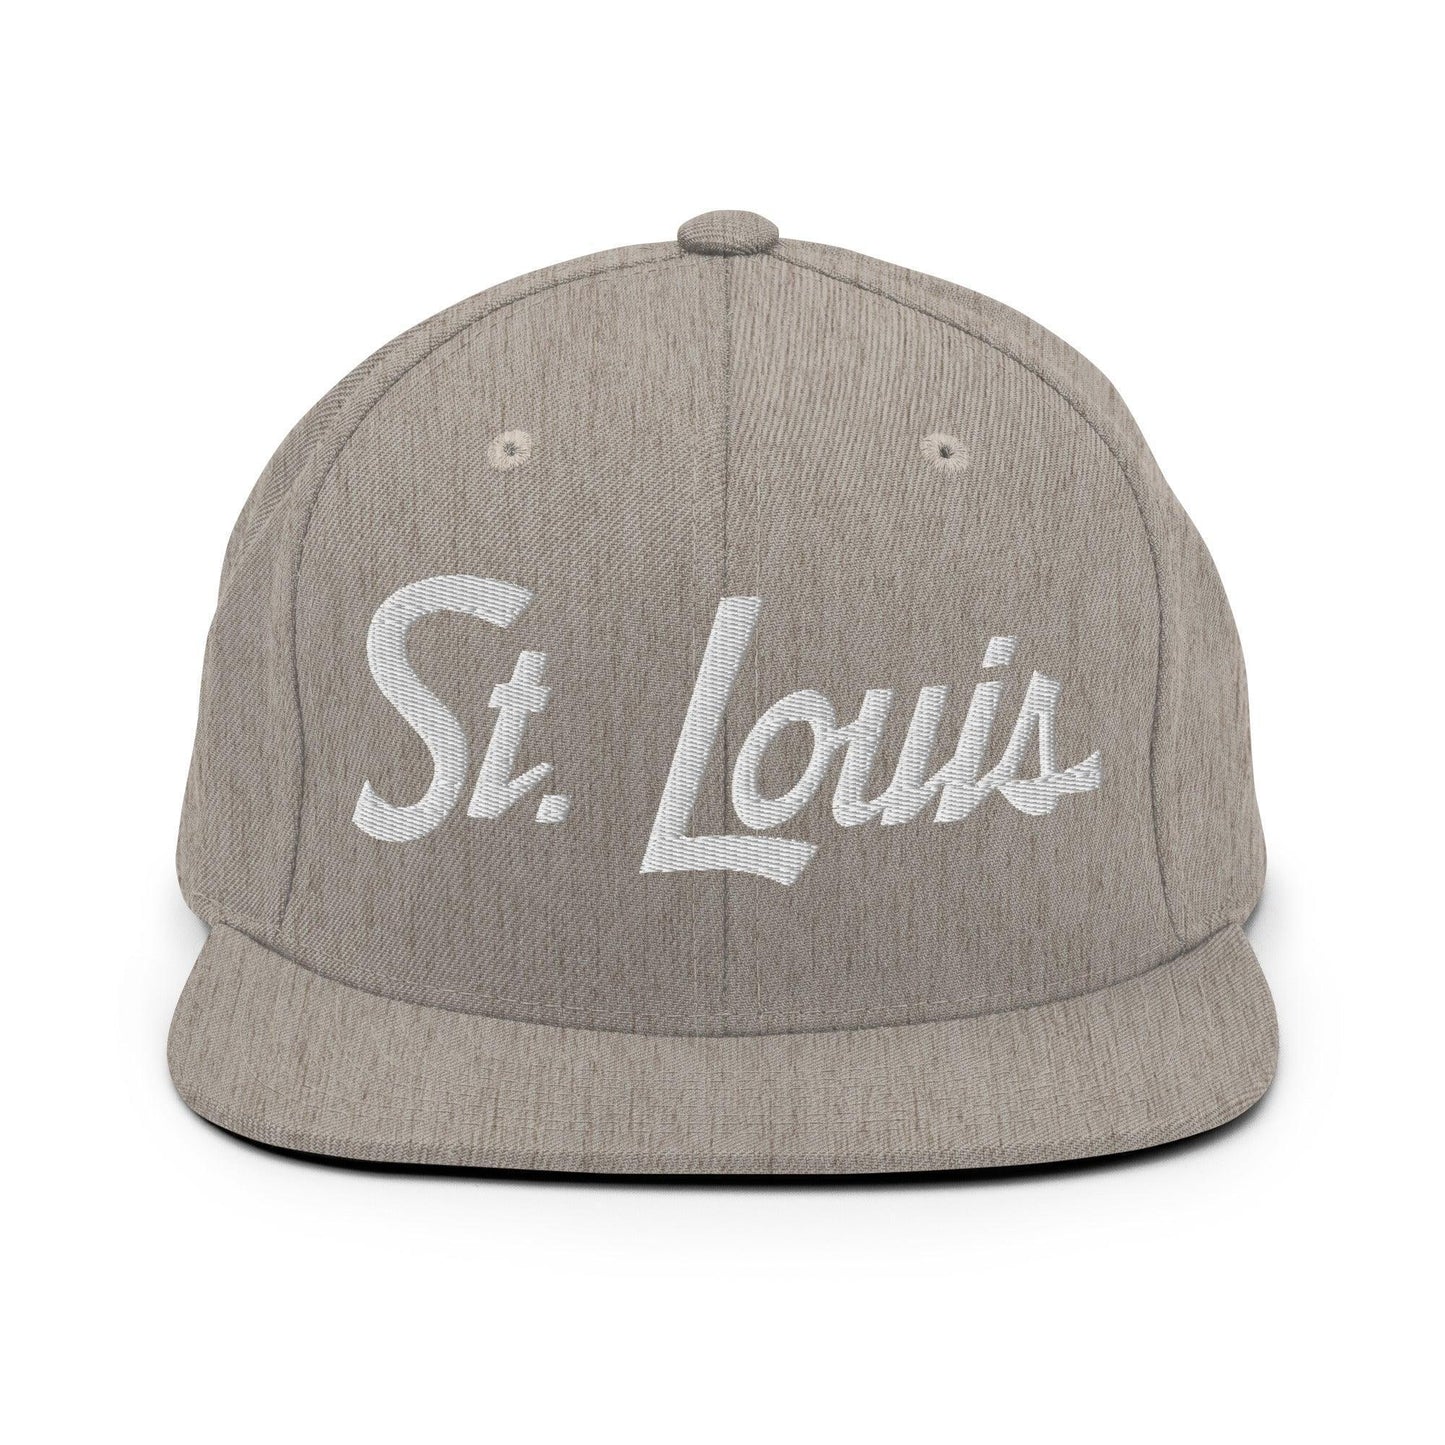 St. Louis Script Snapback Hat Heather Grey